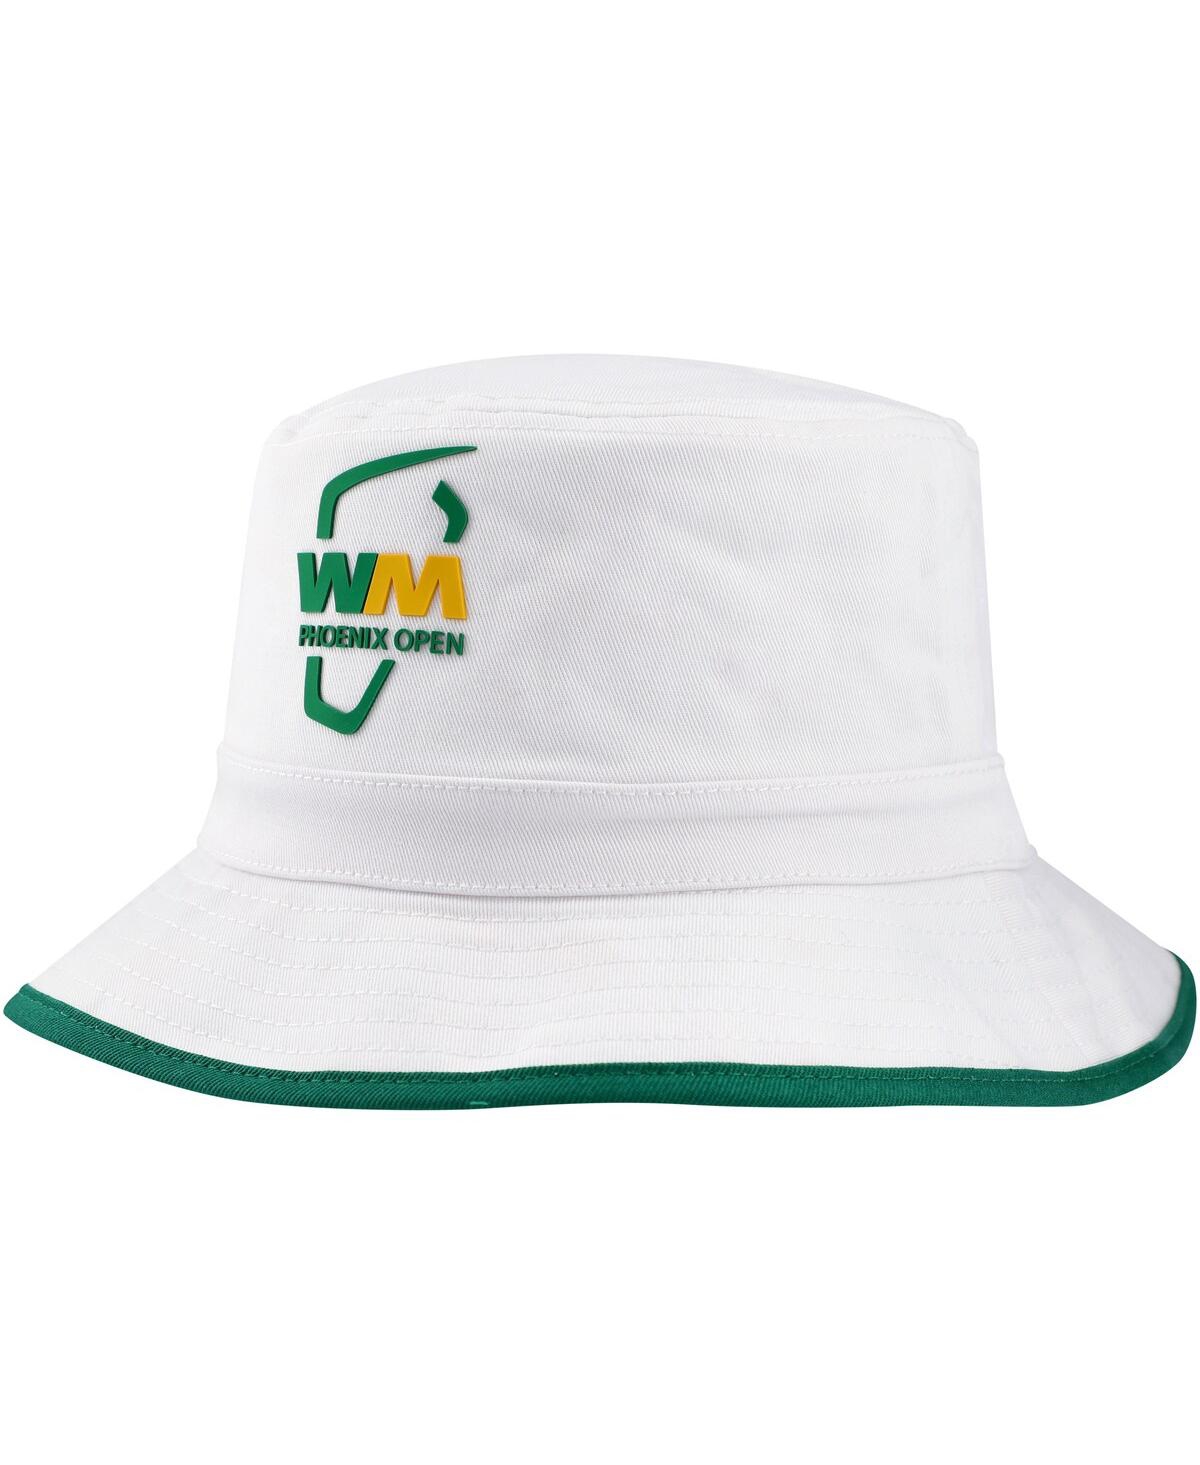 Men's Barstool Golf White Wm Phoenix Open Reversible Bucket Hat - White